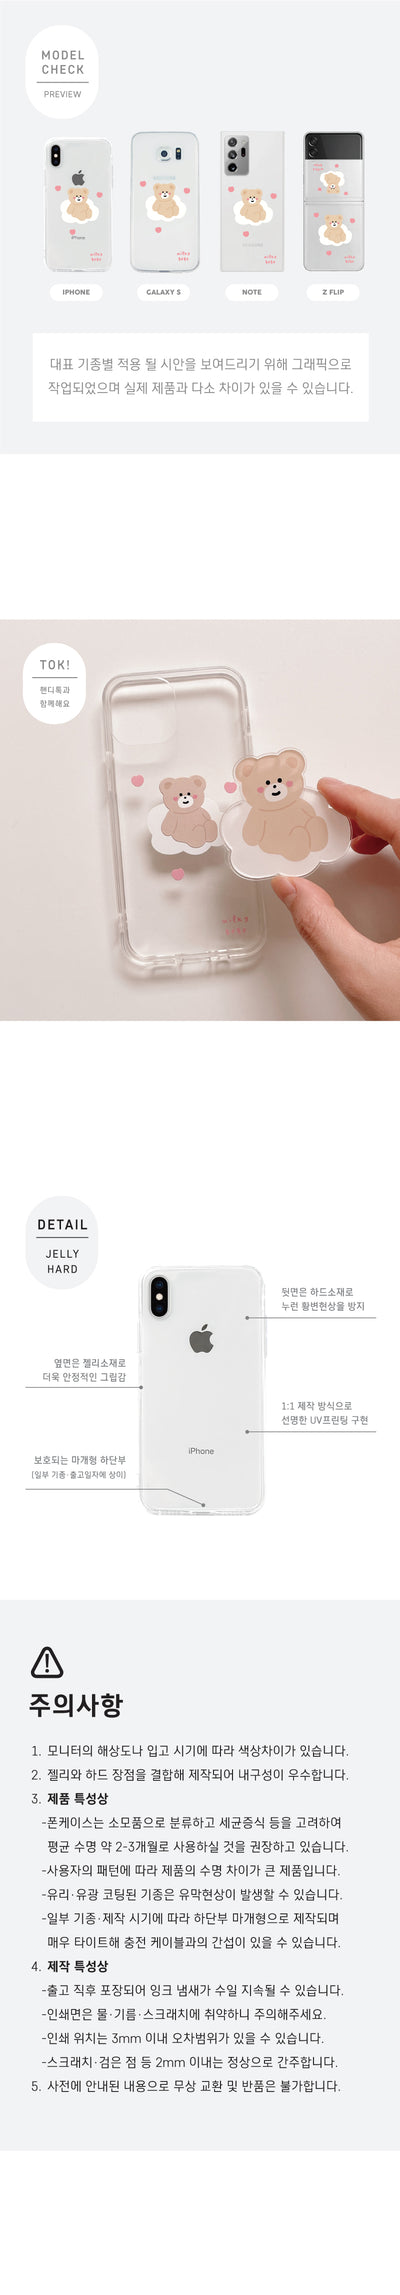 Milky Bebe transparent smartphone case